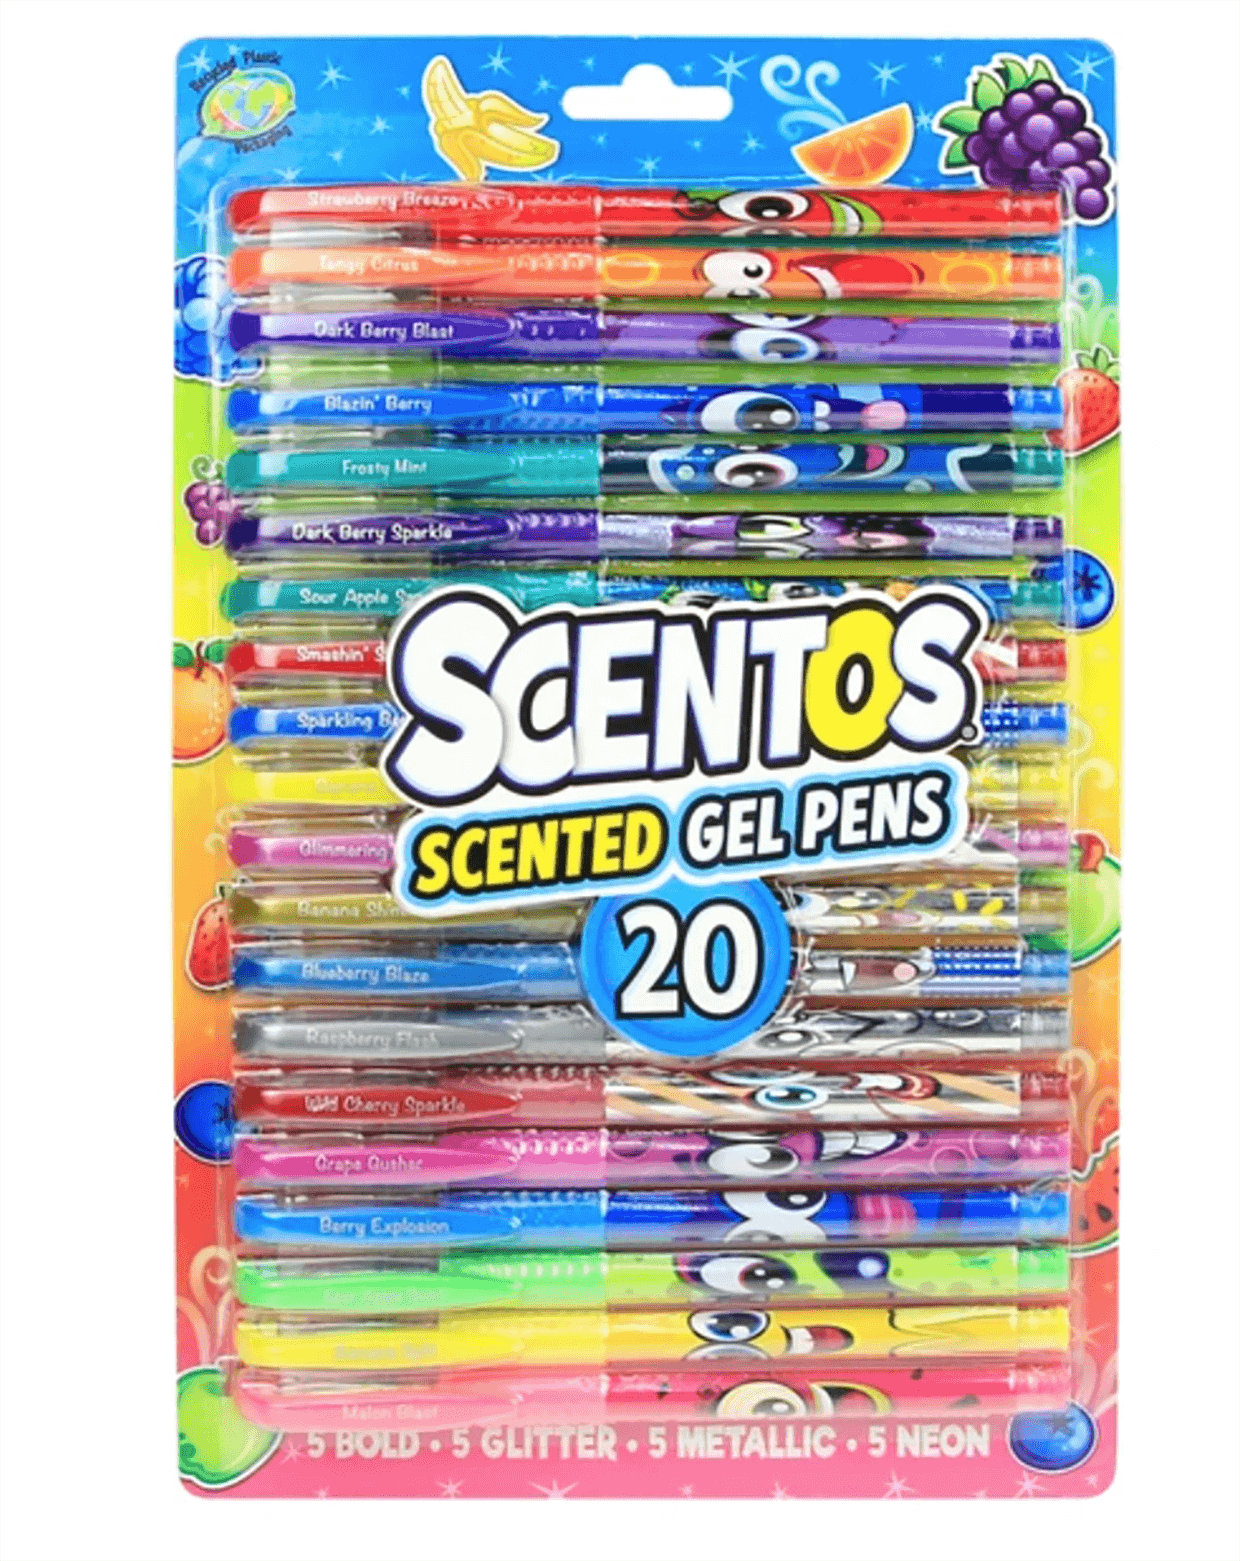 Scentos Scented Gel Pens - 5 Count (Glitter)